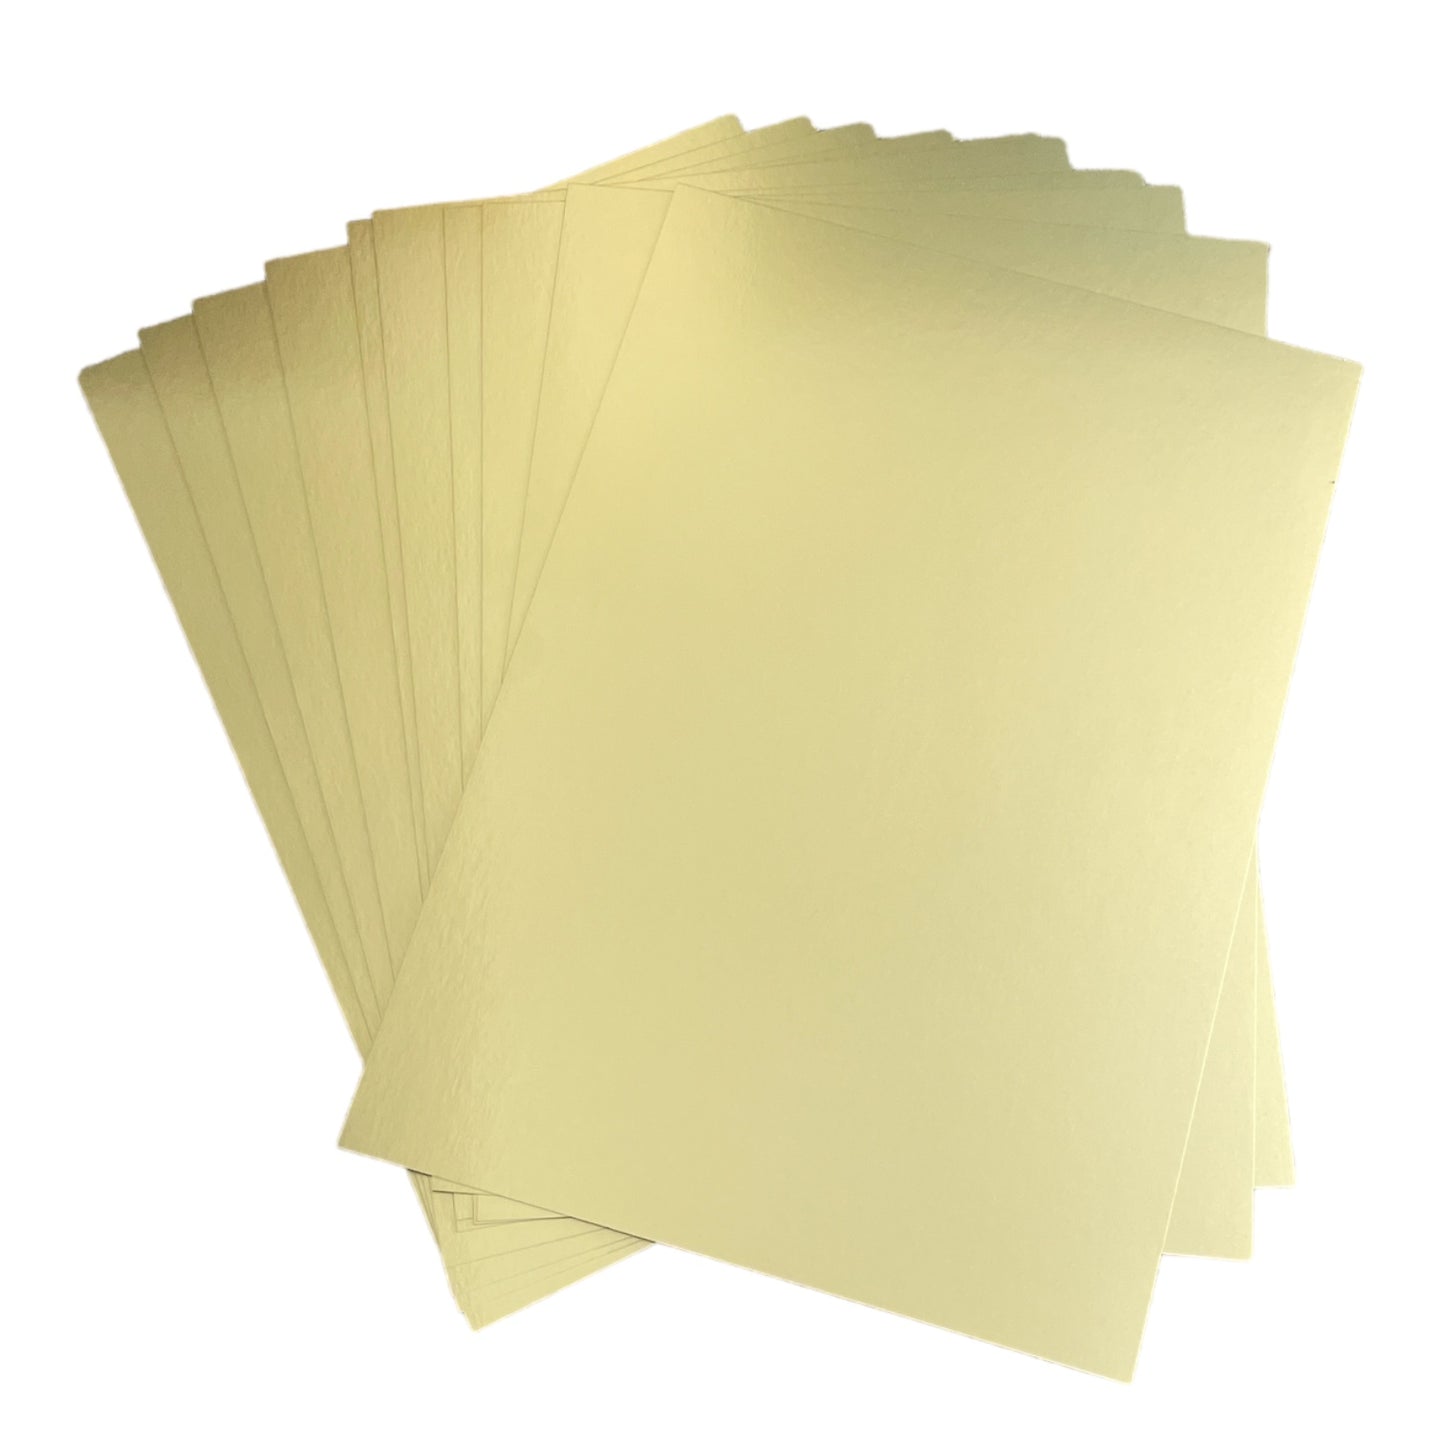 Satin Gold A4 card - 10 sheets